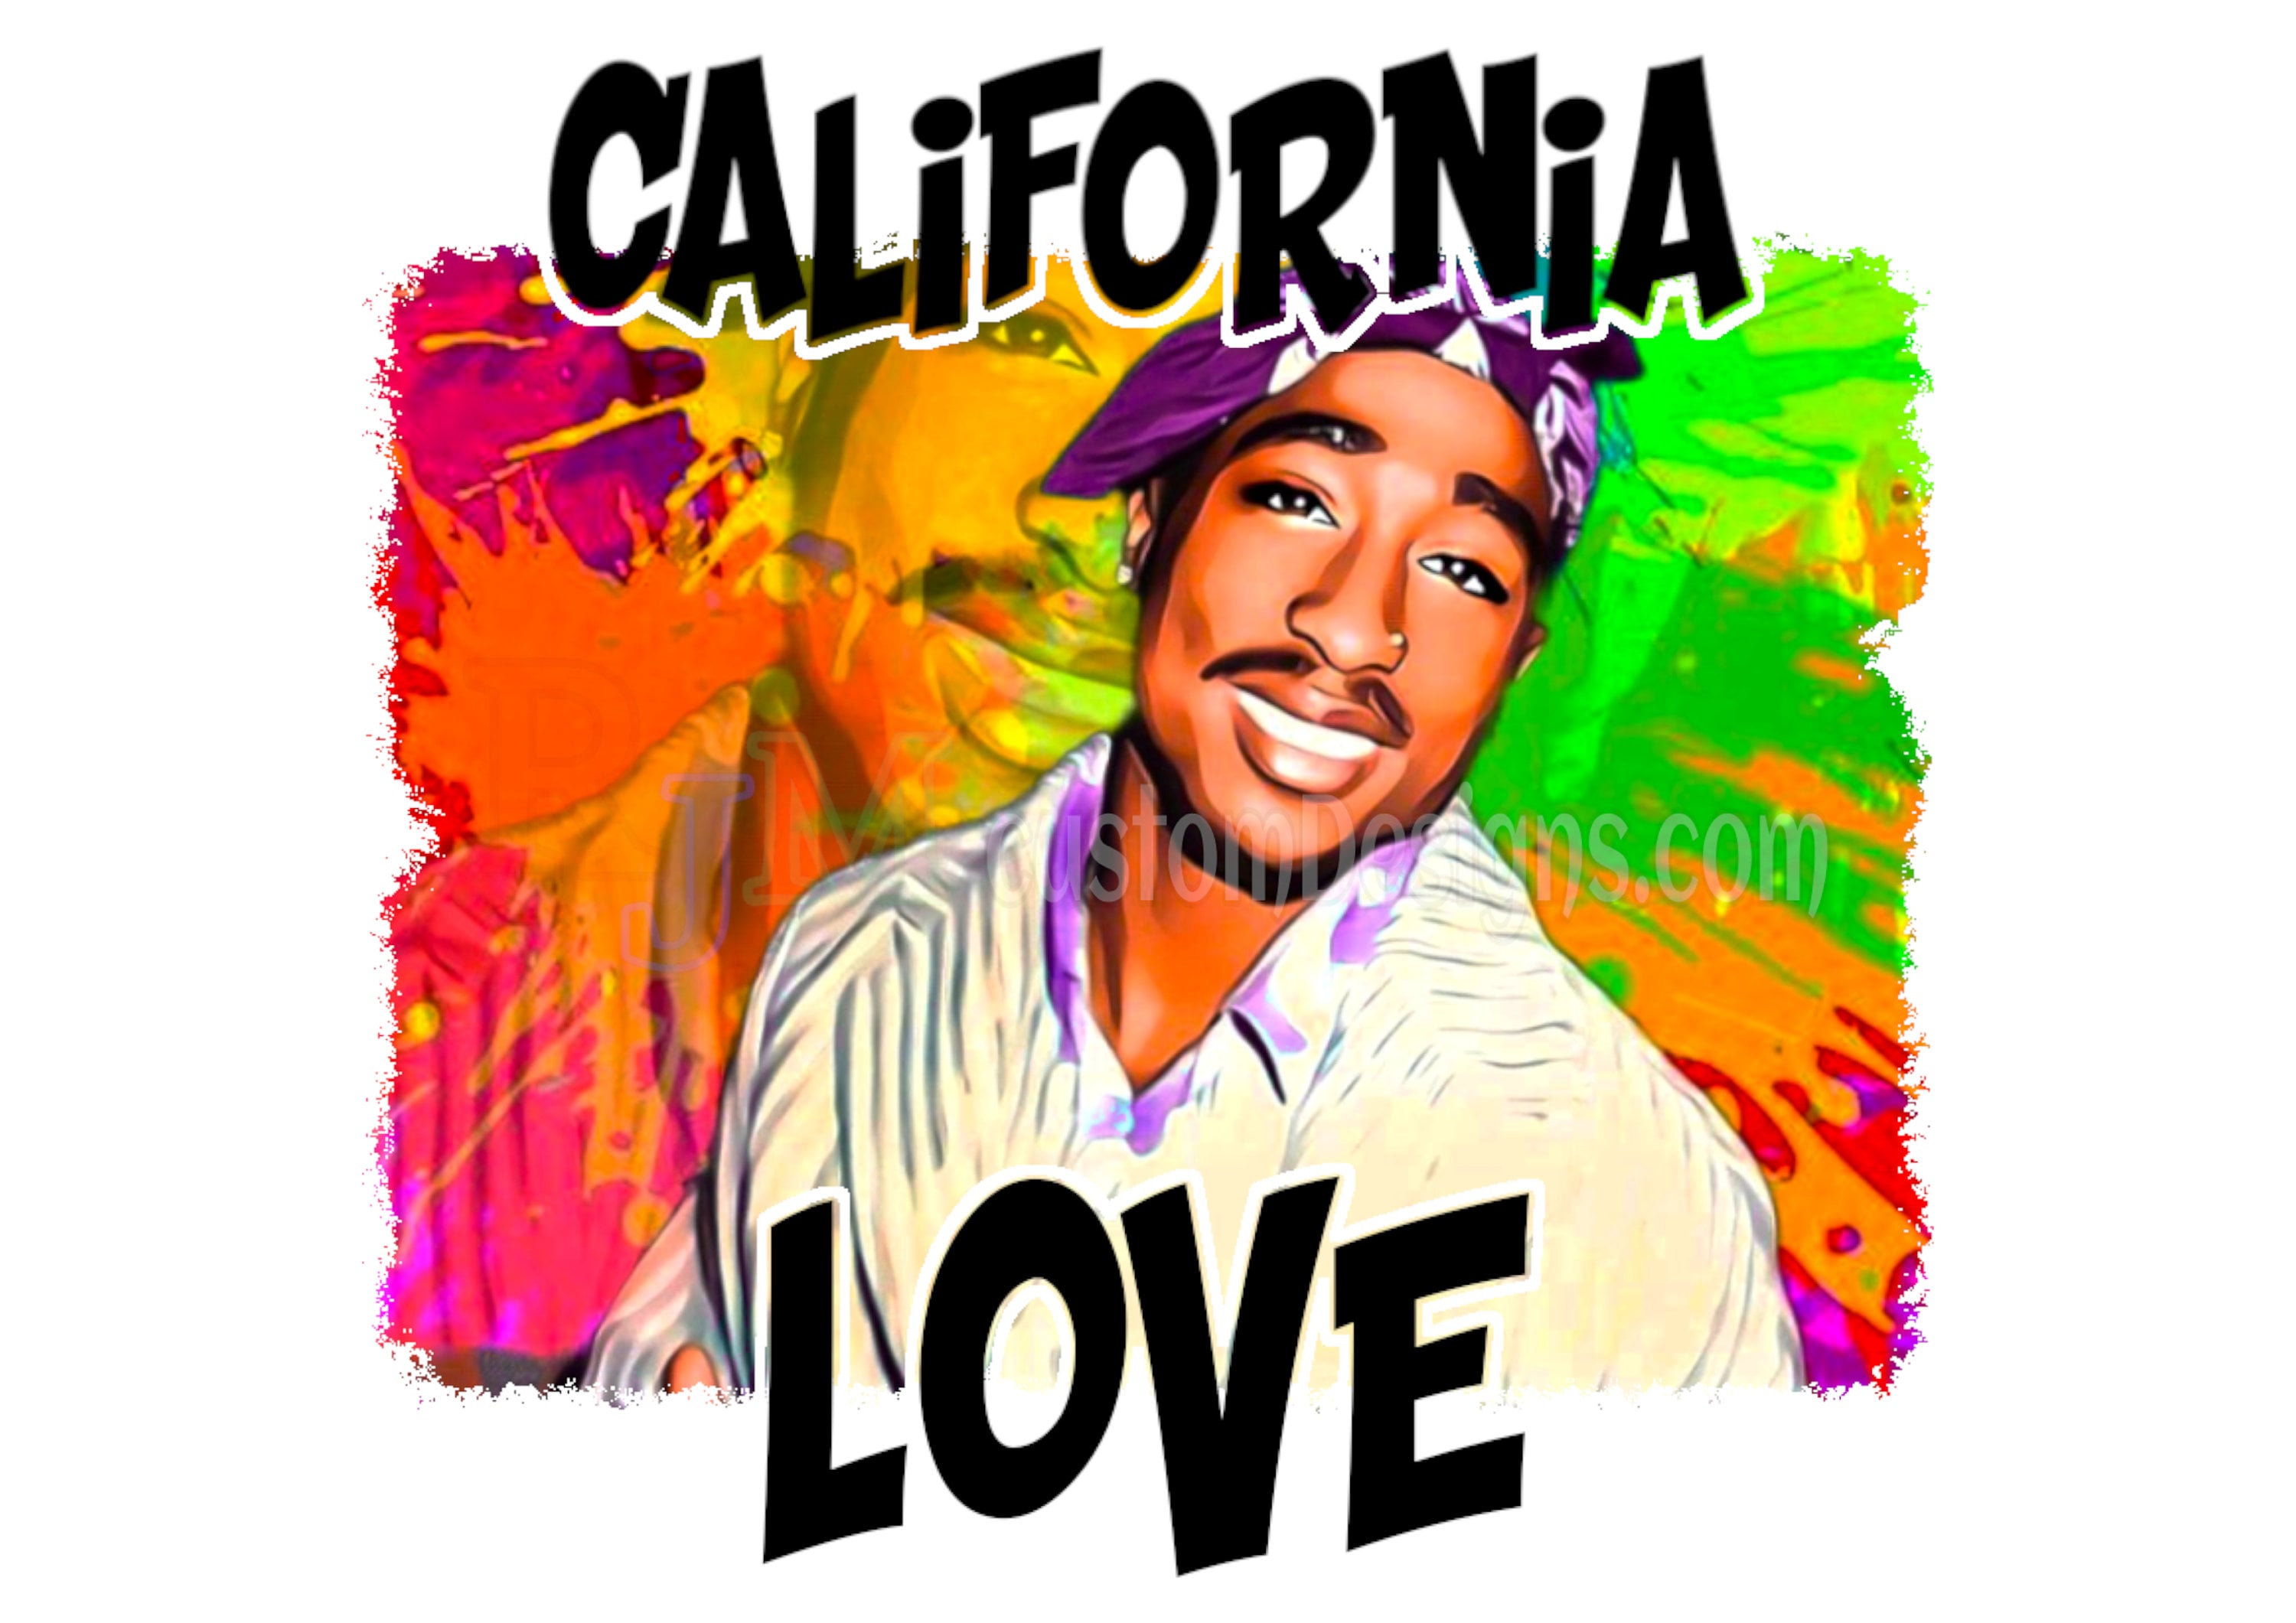 Buy California Love 2pac Online In India -  India